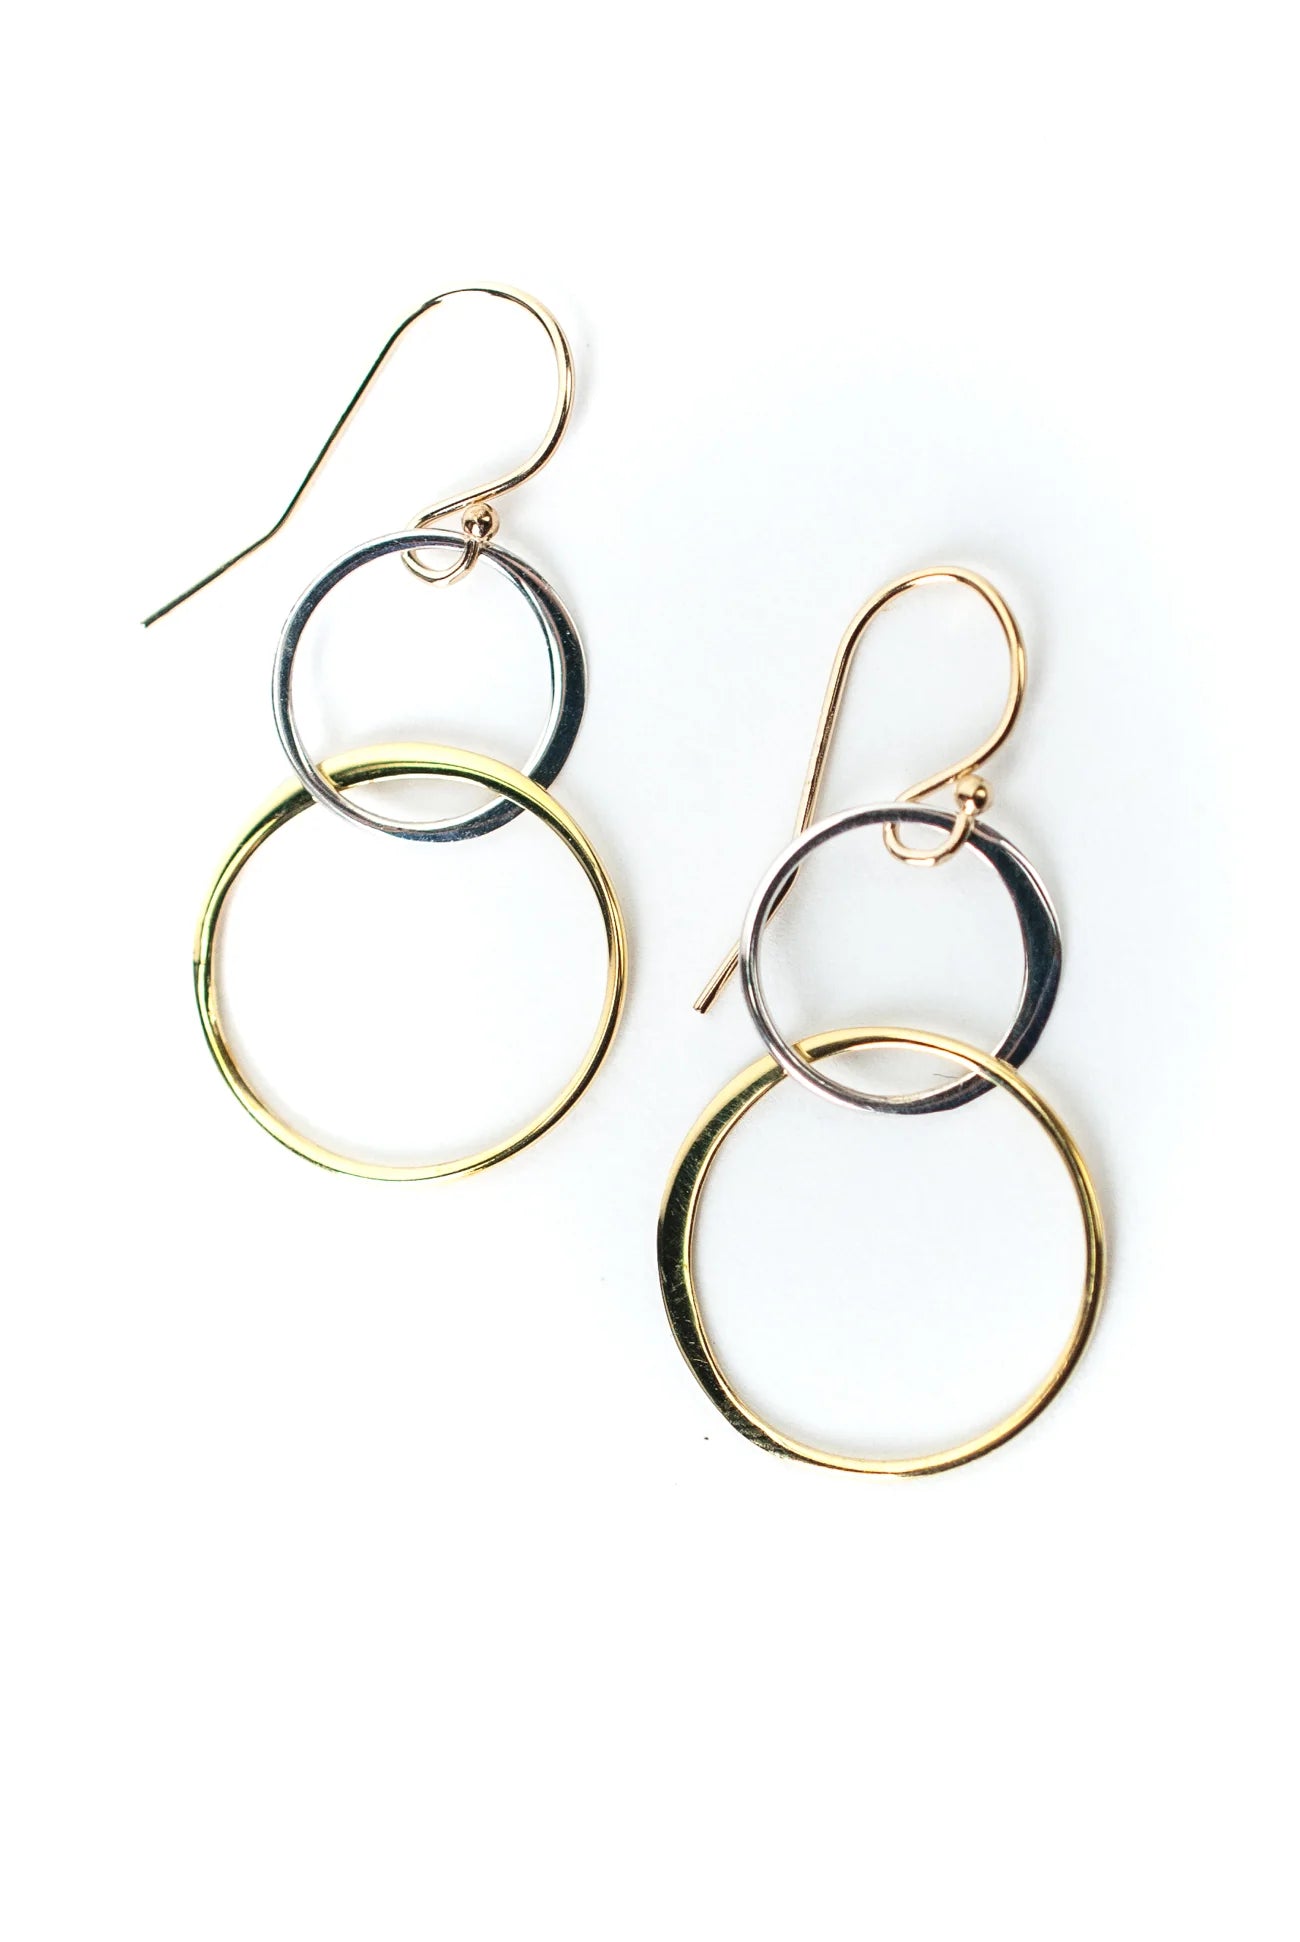 Vaughan - Seaside Collection - Earrings - Double Silver & Gold Hoops #Sea036E